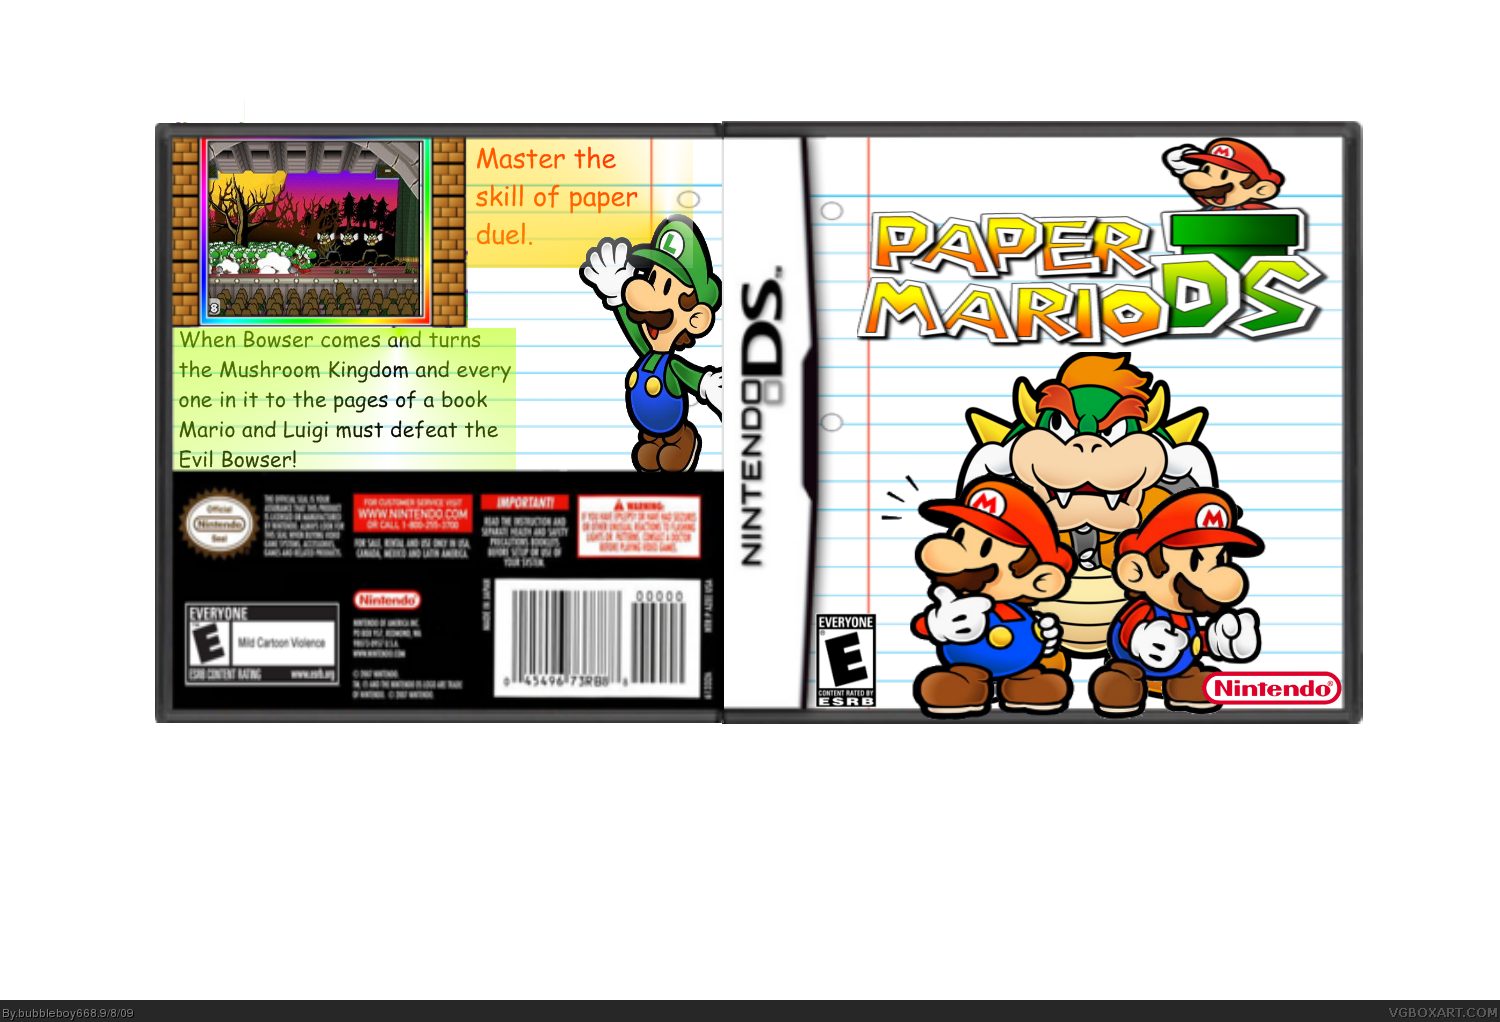 Paper Mario DS box cover